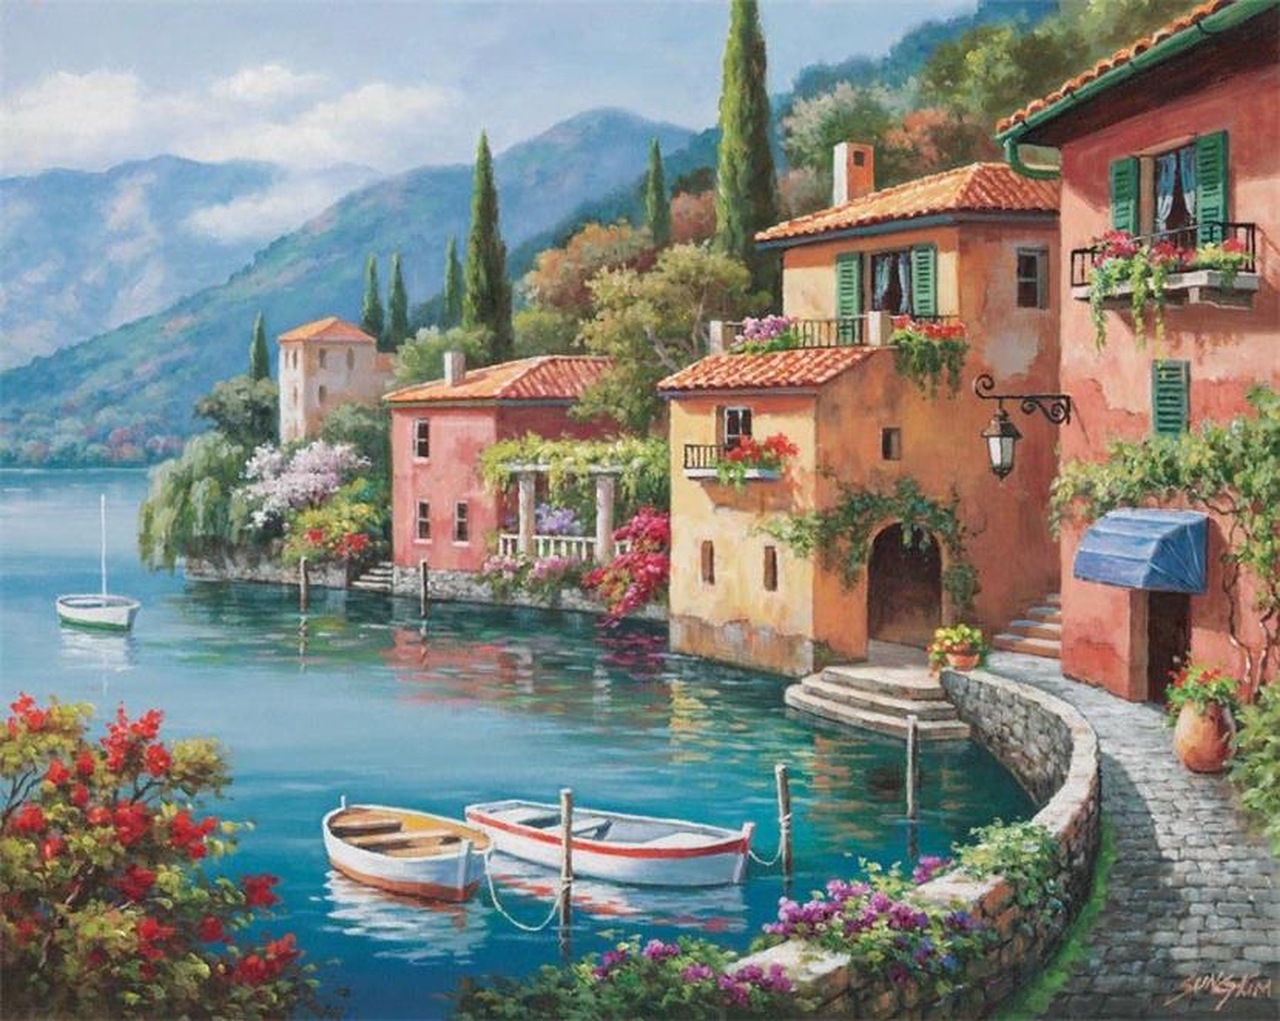 Живописец Сен Ким, средиземноморское побережье, лодки и дома на фоне гор и воды